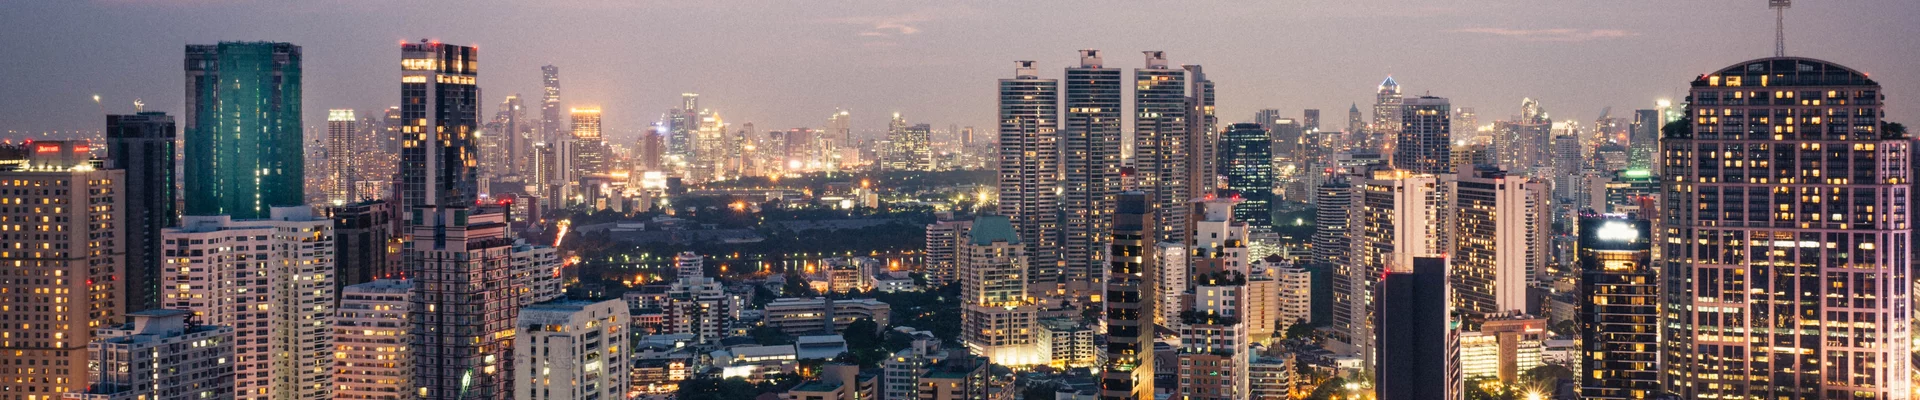 Cityscape of Bangkok Downtown